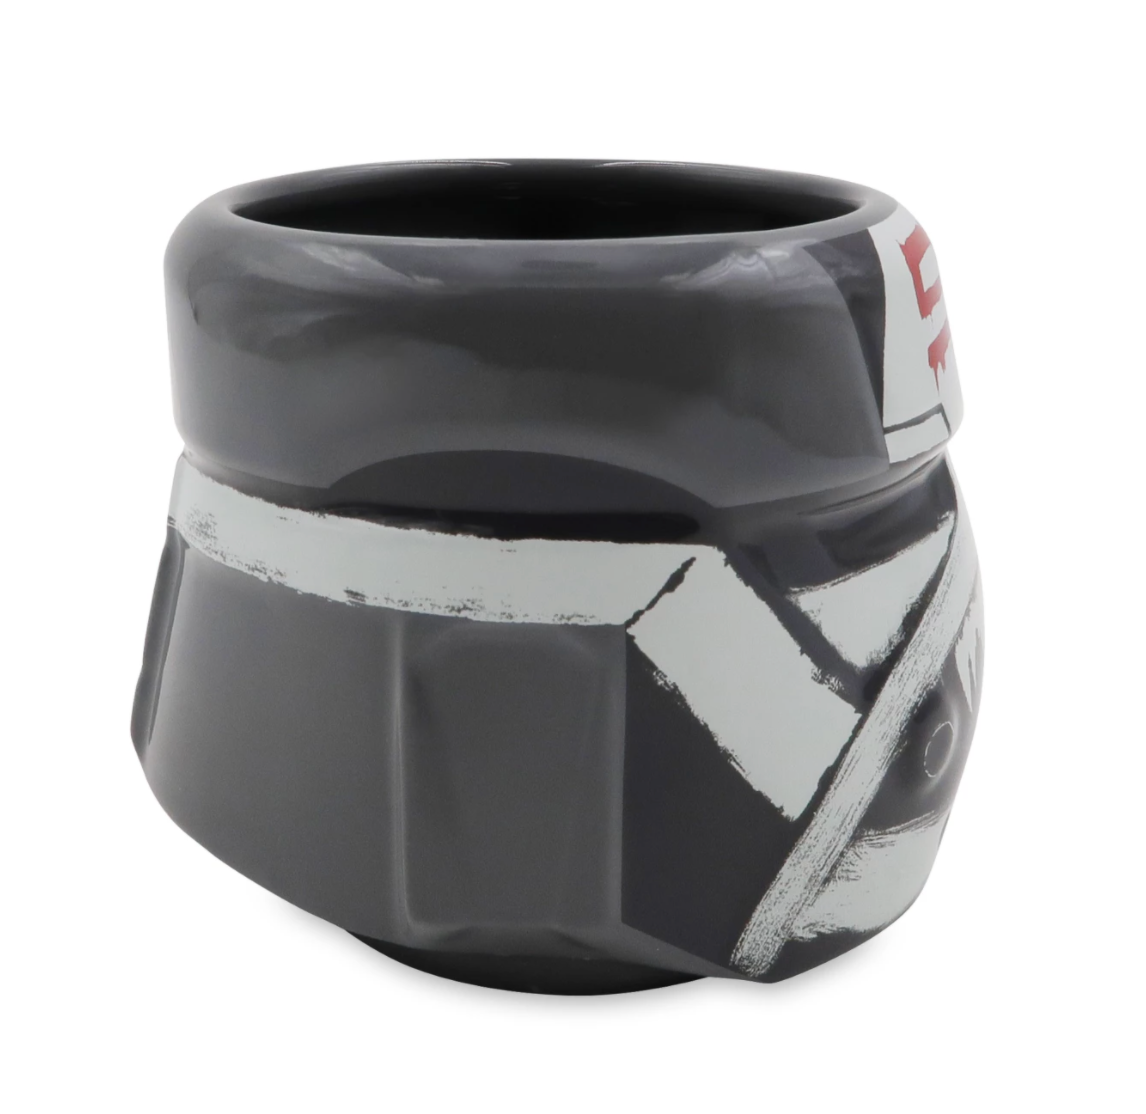 Disney Star Wars Day May the 4th Wrecker The Bad Batch Coffee Mug New